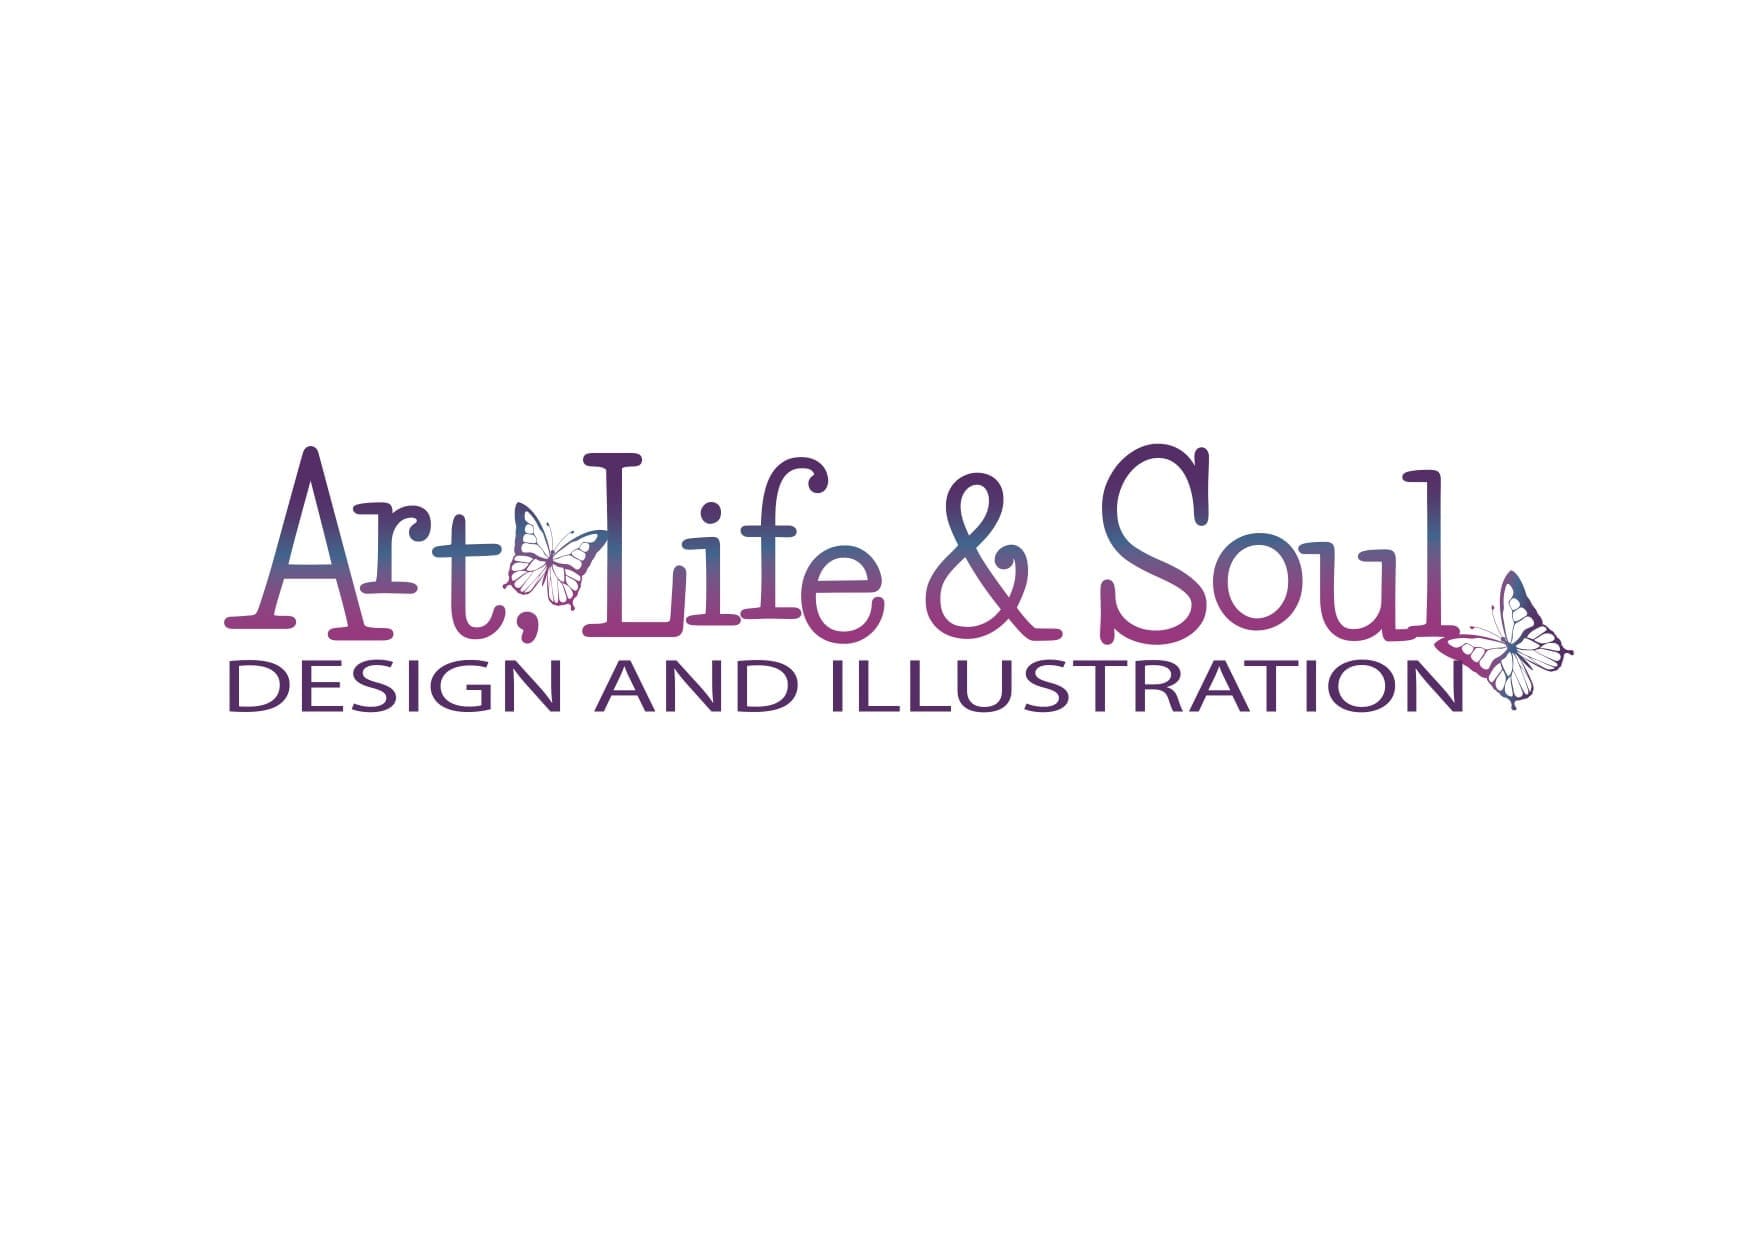 Art Life & Soul Design